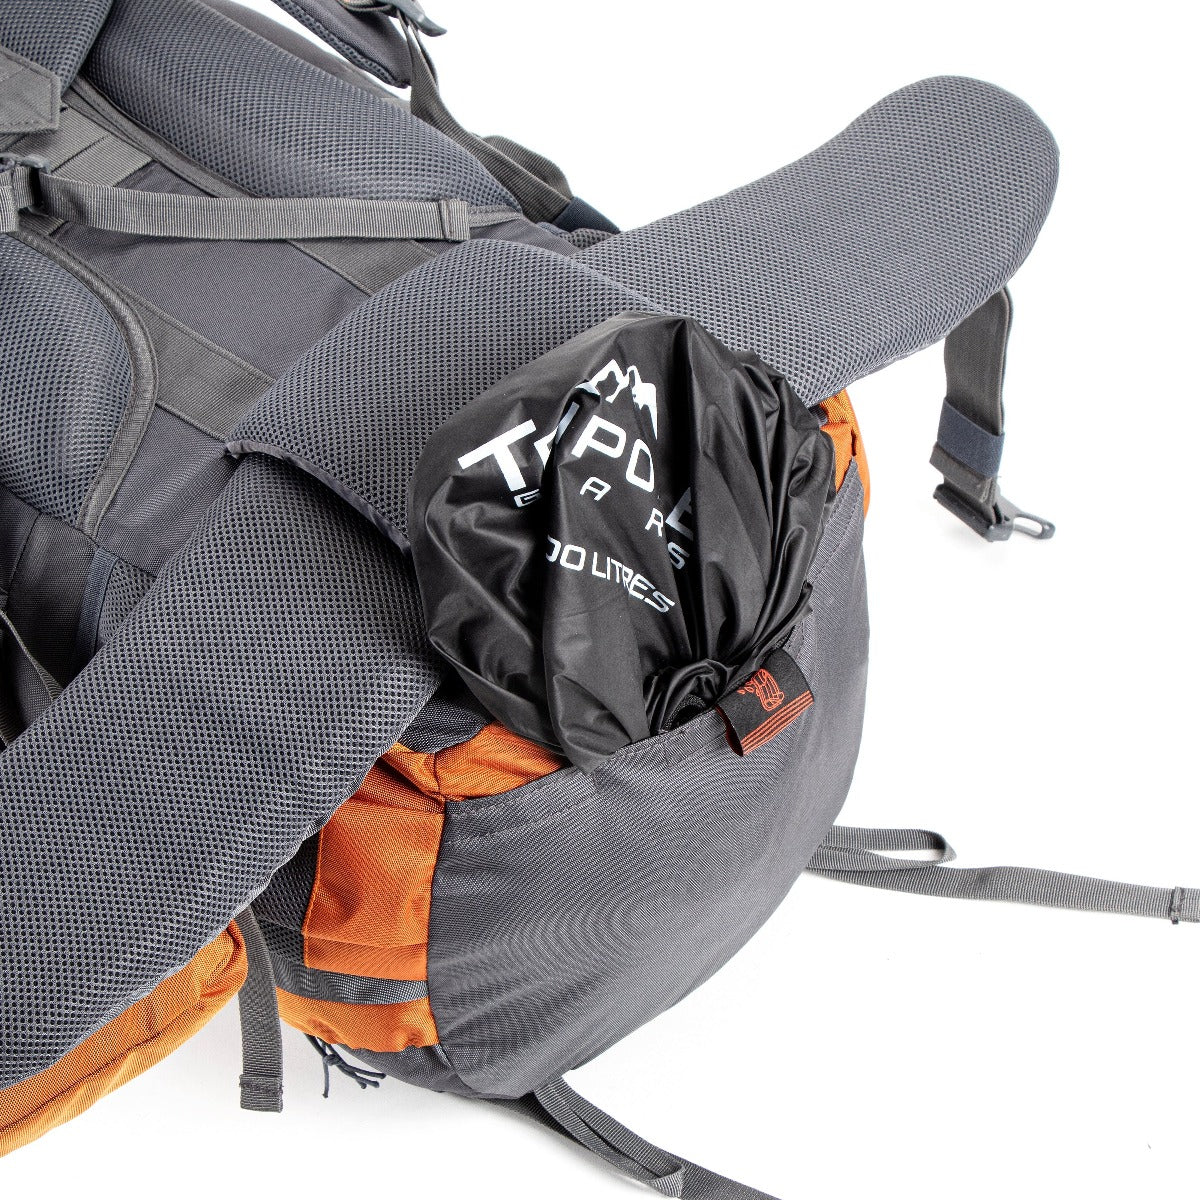 Walker Trekking and Backpacking Rucksack - 65 Litre - Grey & Orange 9